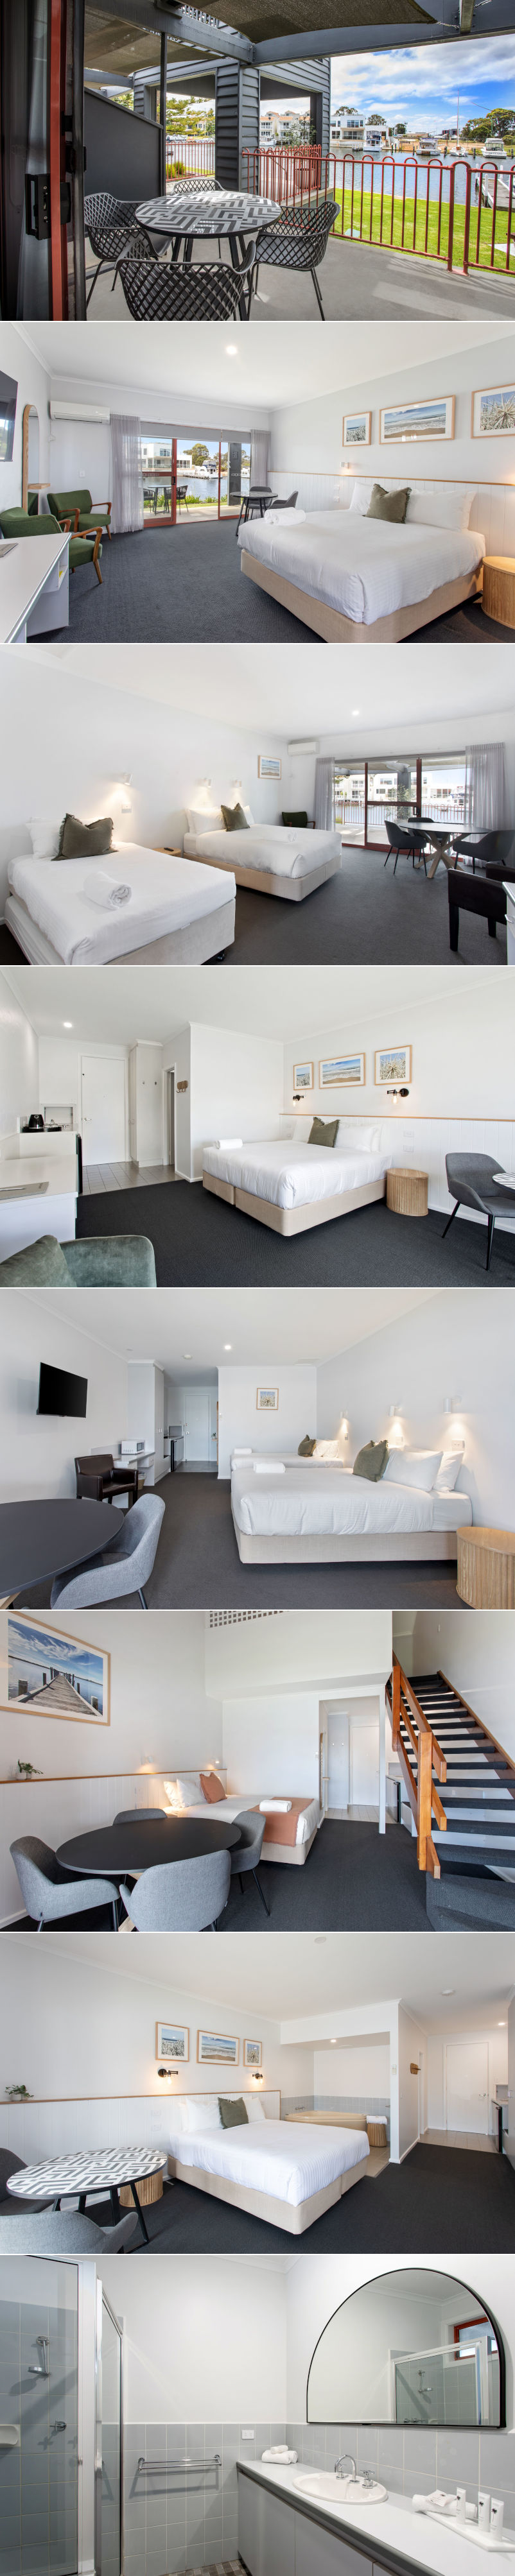 Mariners Cove Motel & Apartments - Motel units